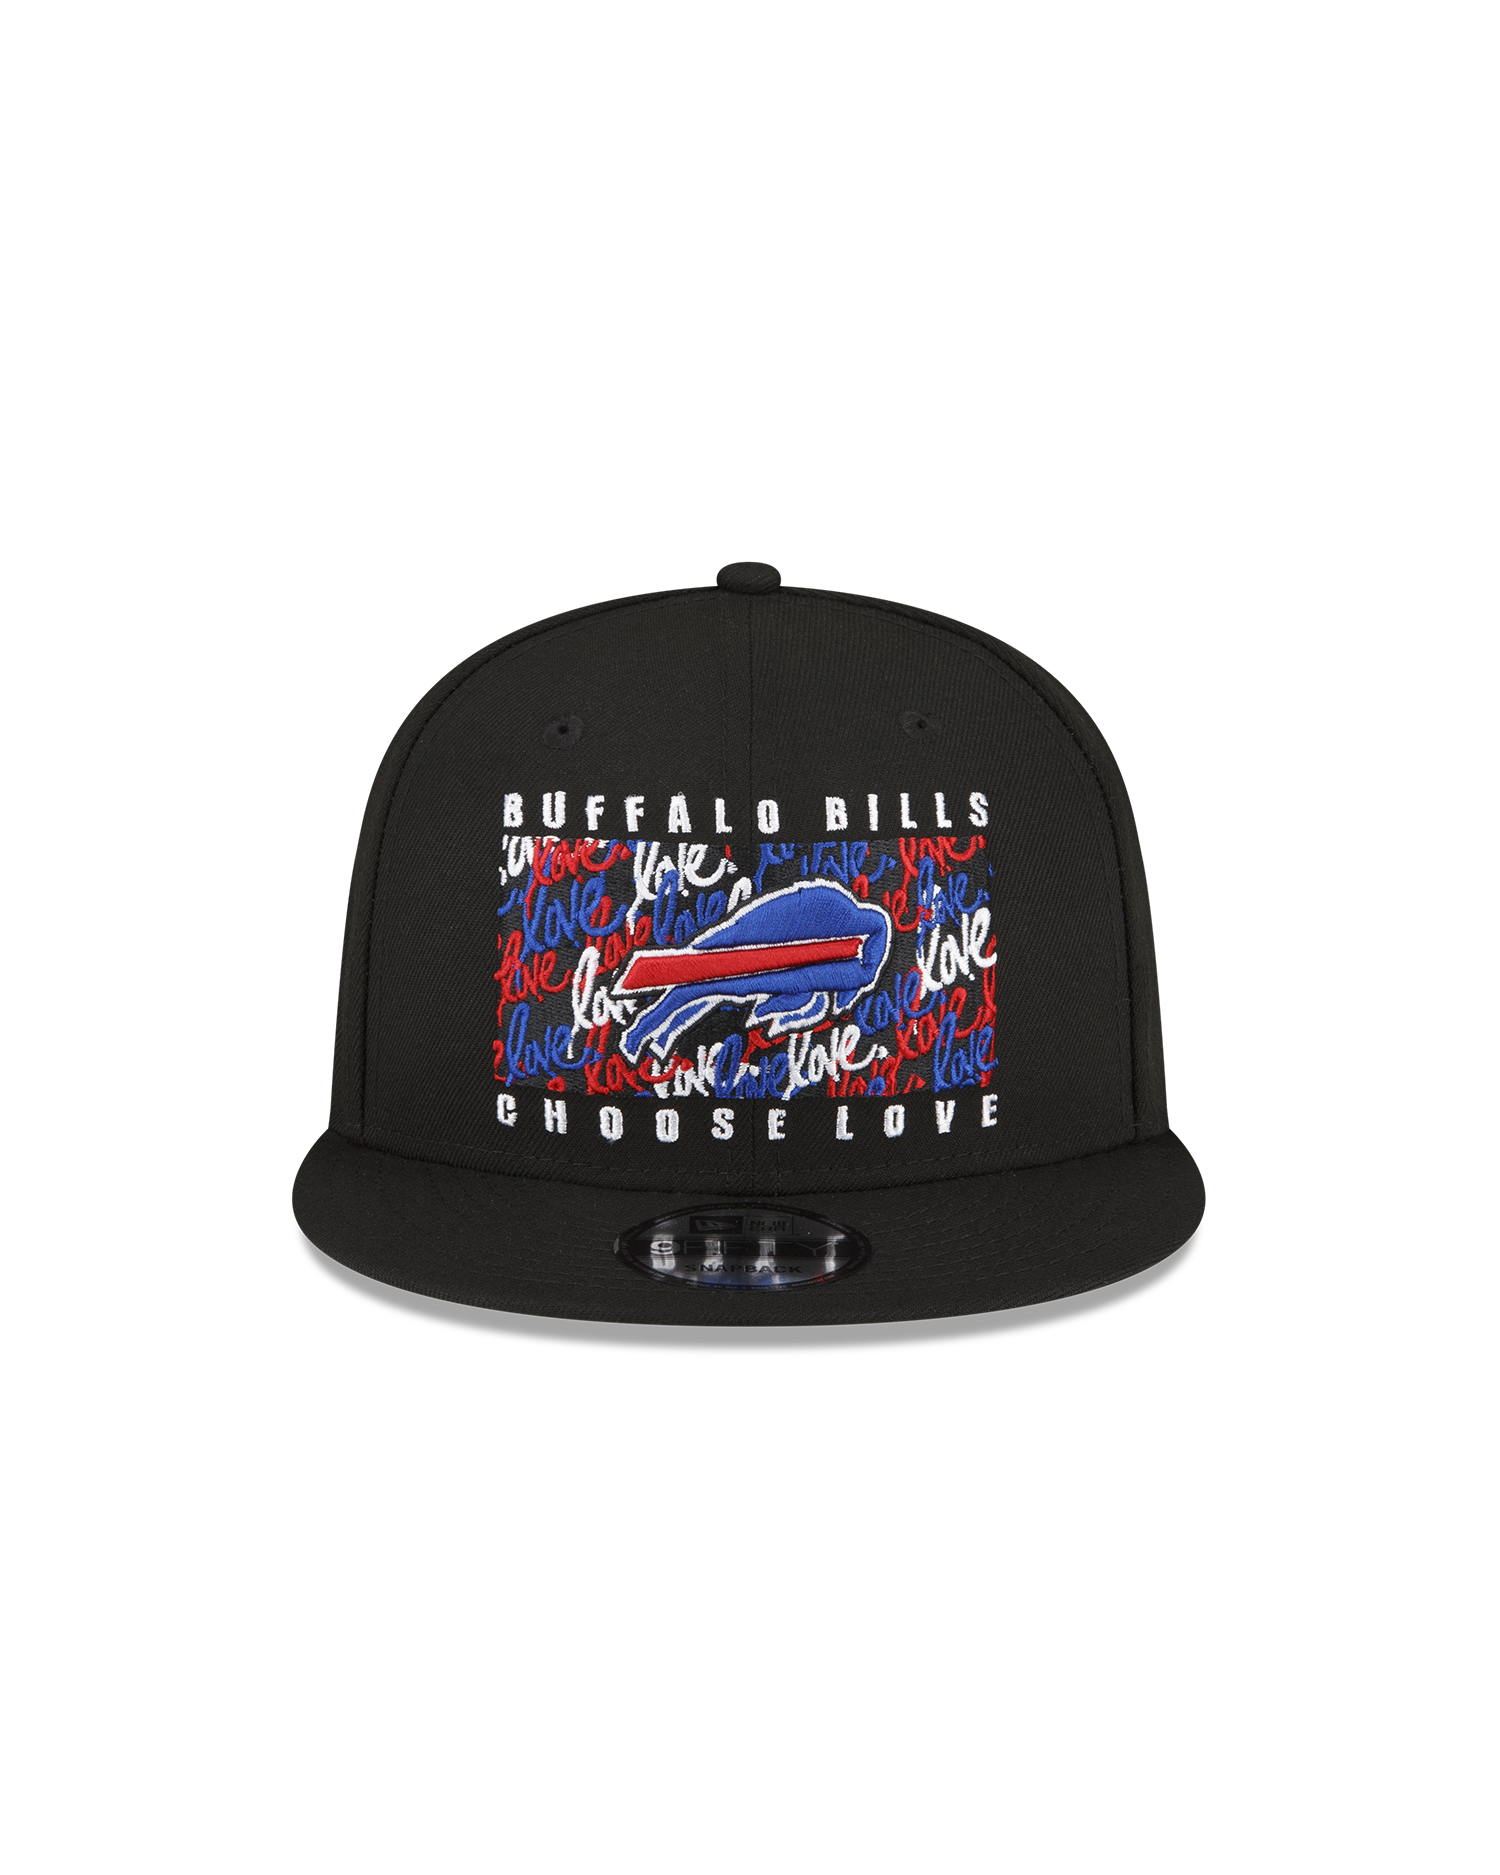 Ruben Rojas x Buffalo Bills Black 9FIFTY Snapbacks